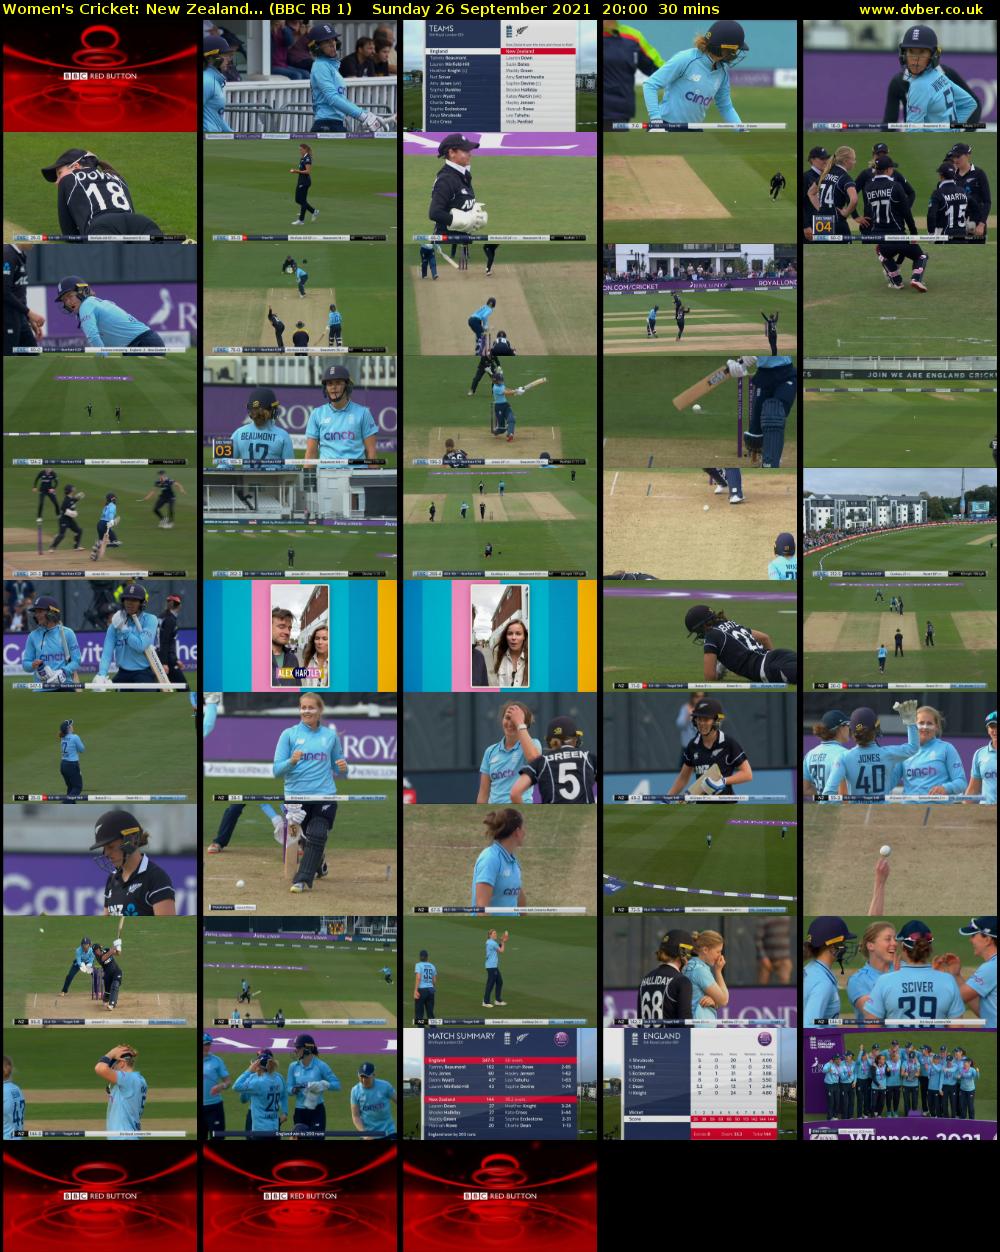 Women's Cricket: New Zealand... (BBC RB 1) Sunday 26 September 2021 20:00 - 20:30